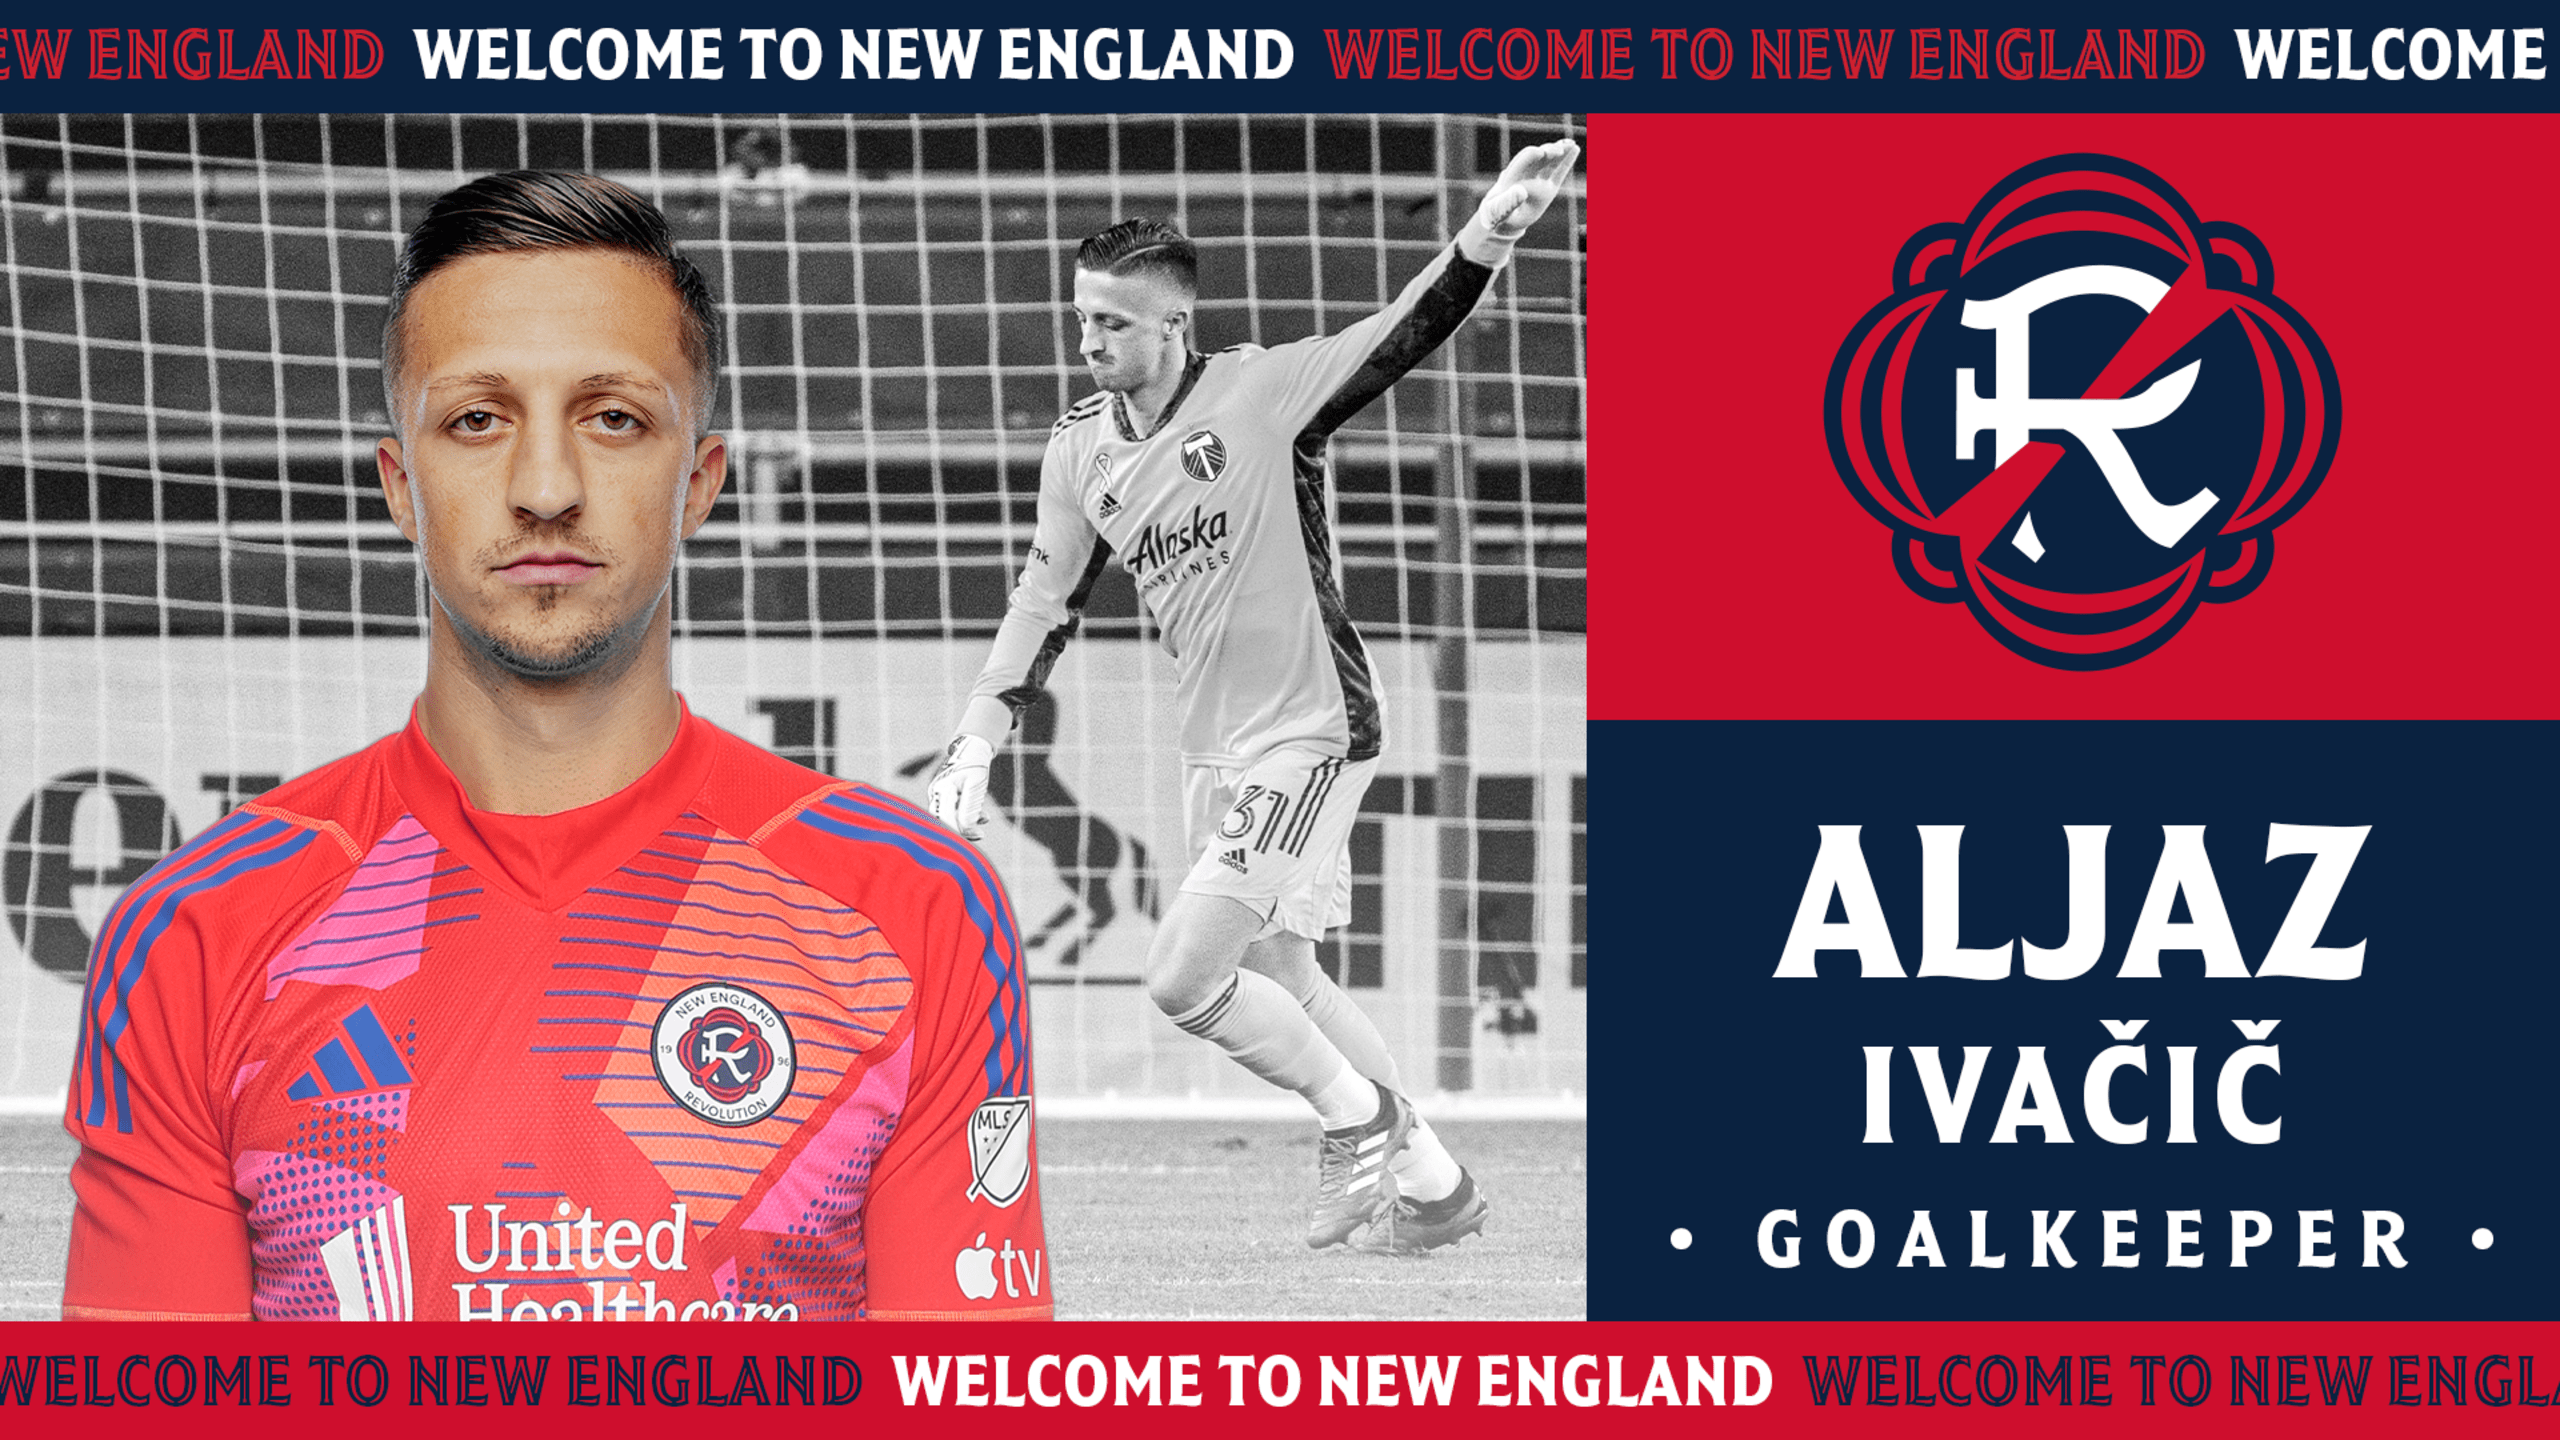 Former Portland Timbers goalkeeper Aljaž Ivačič signs for The New England Revolution through the 2025 Major League Soccer season